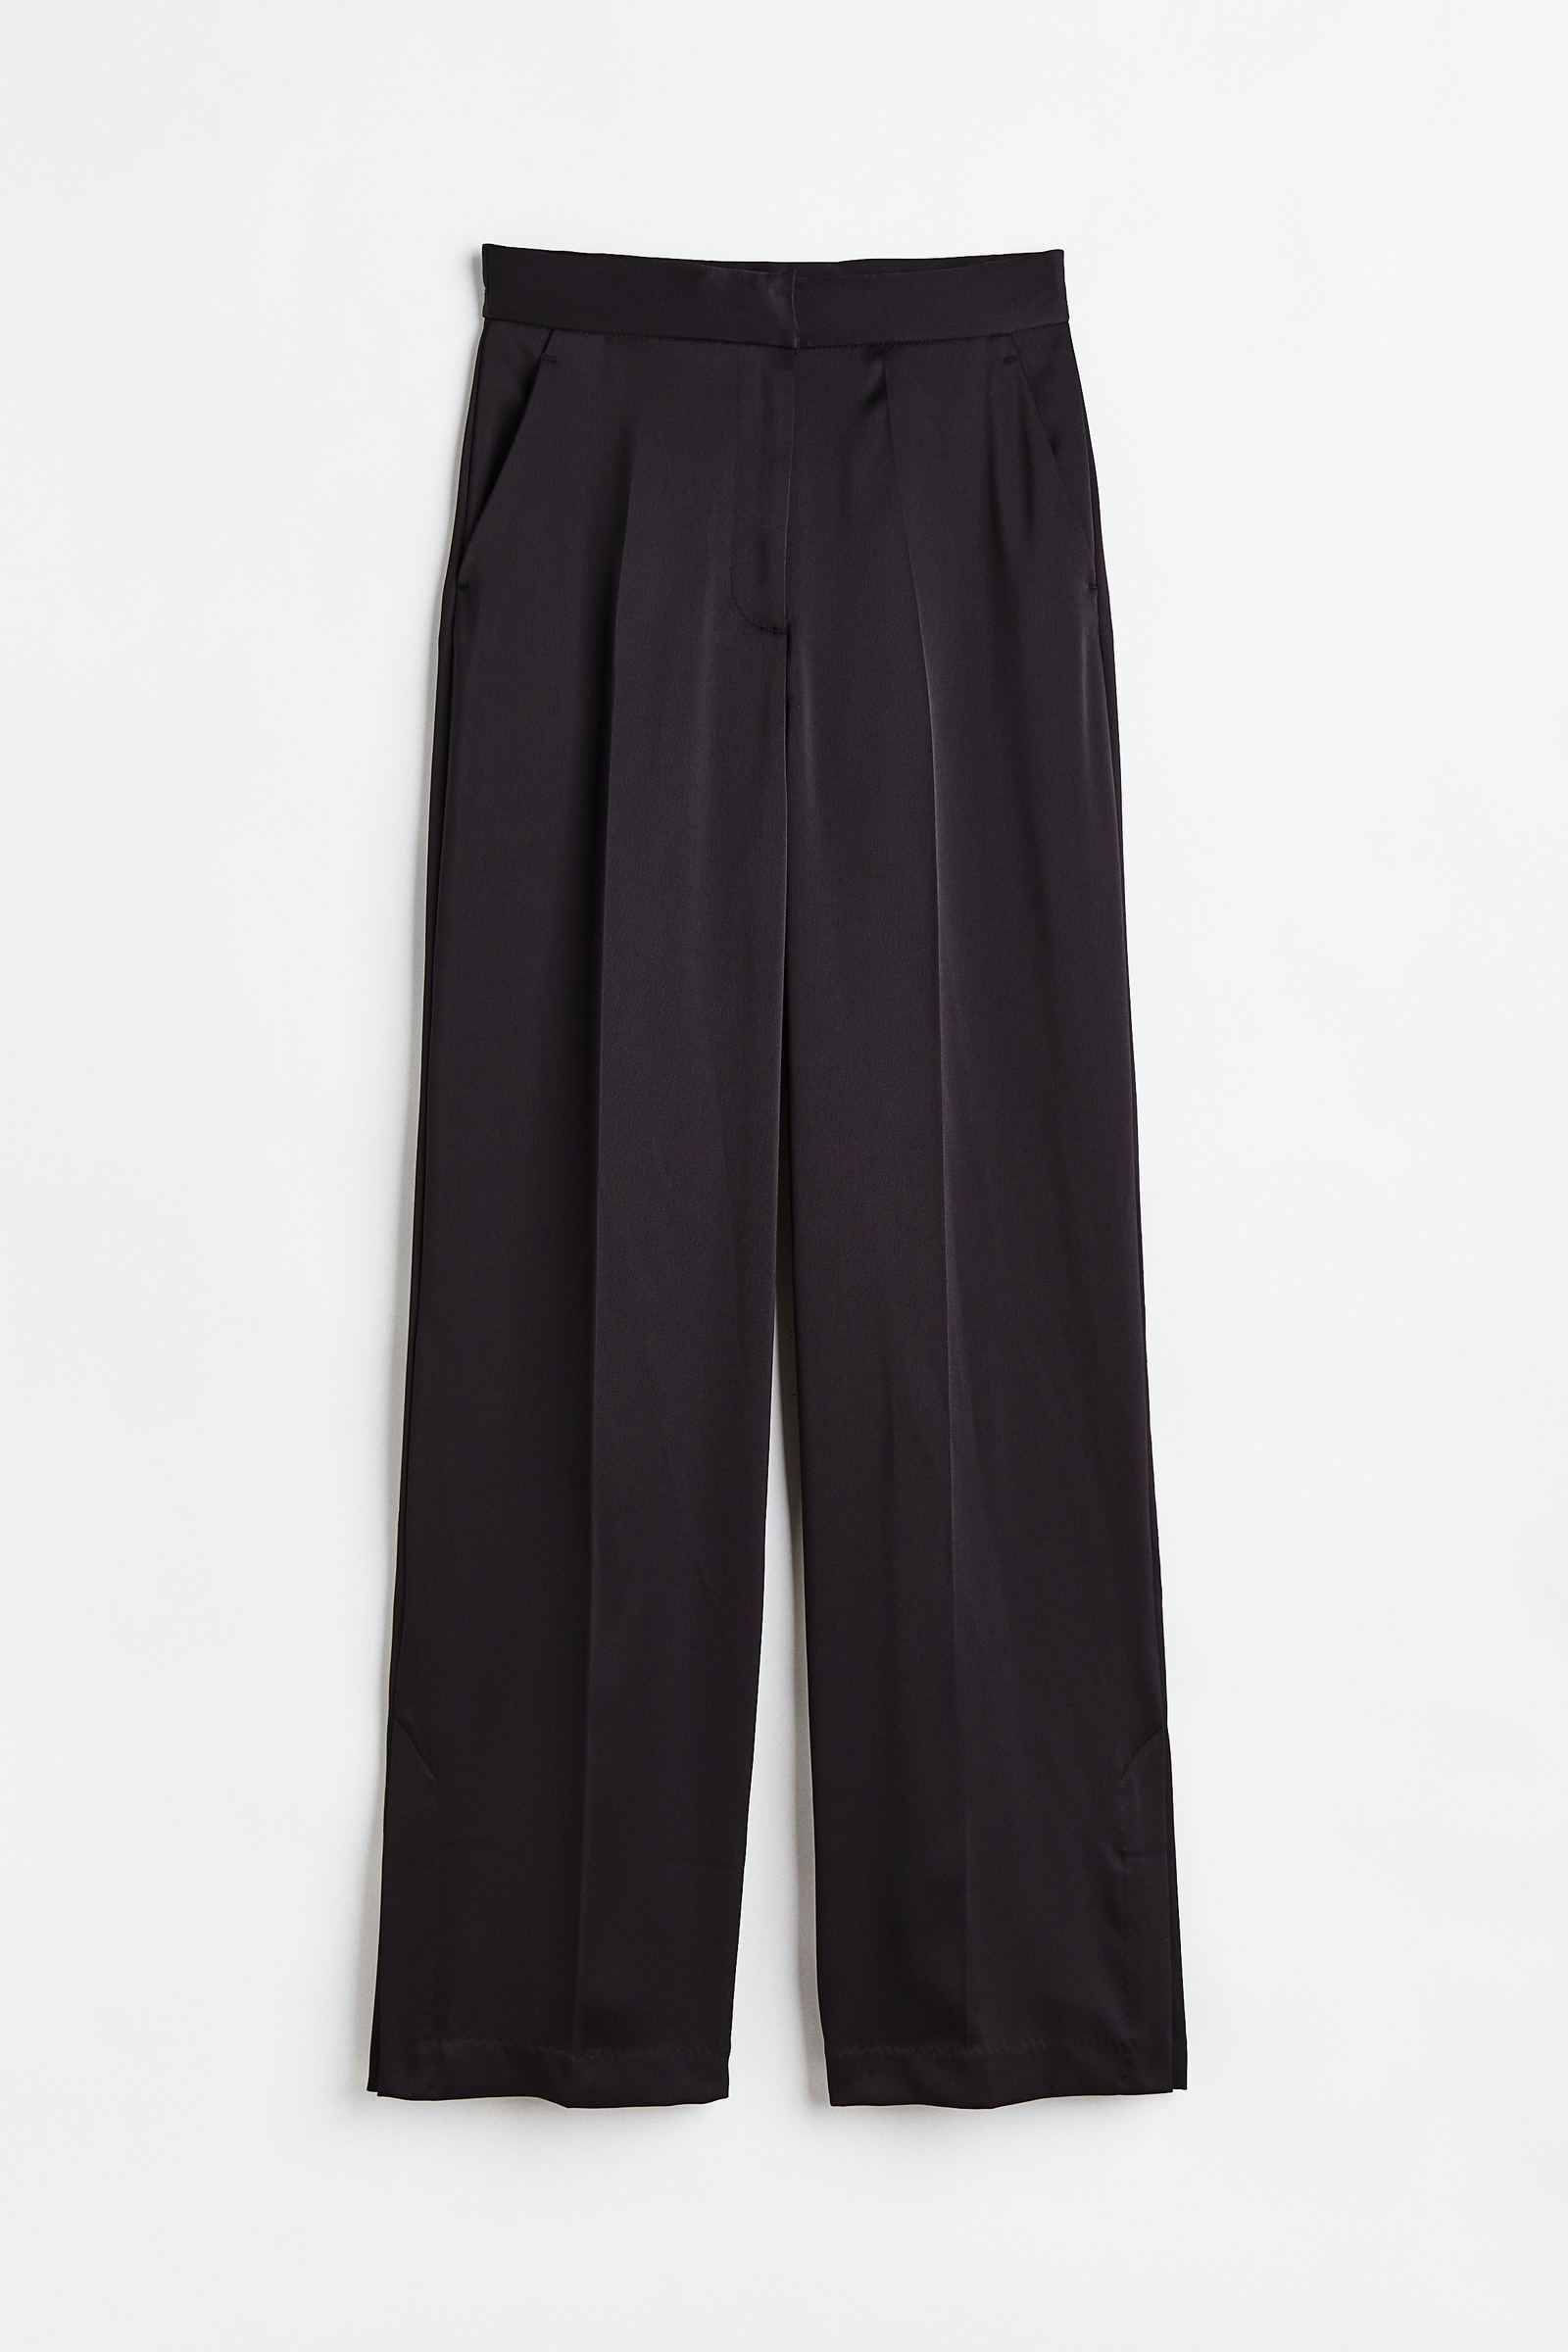 Pantalones de cintura alta para Mujer - H&M CL